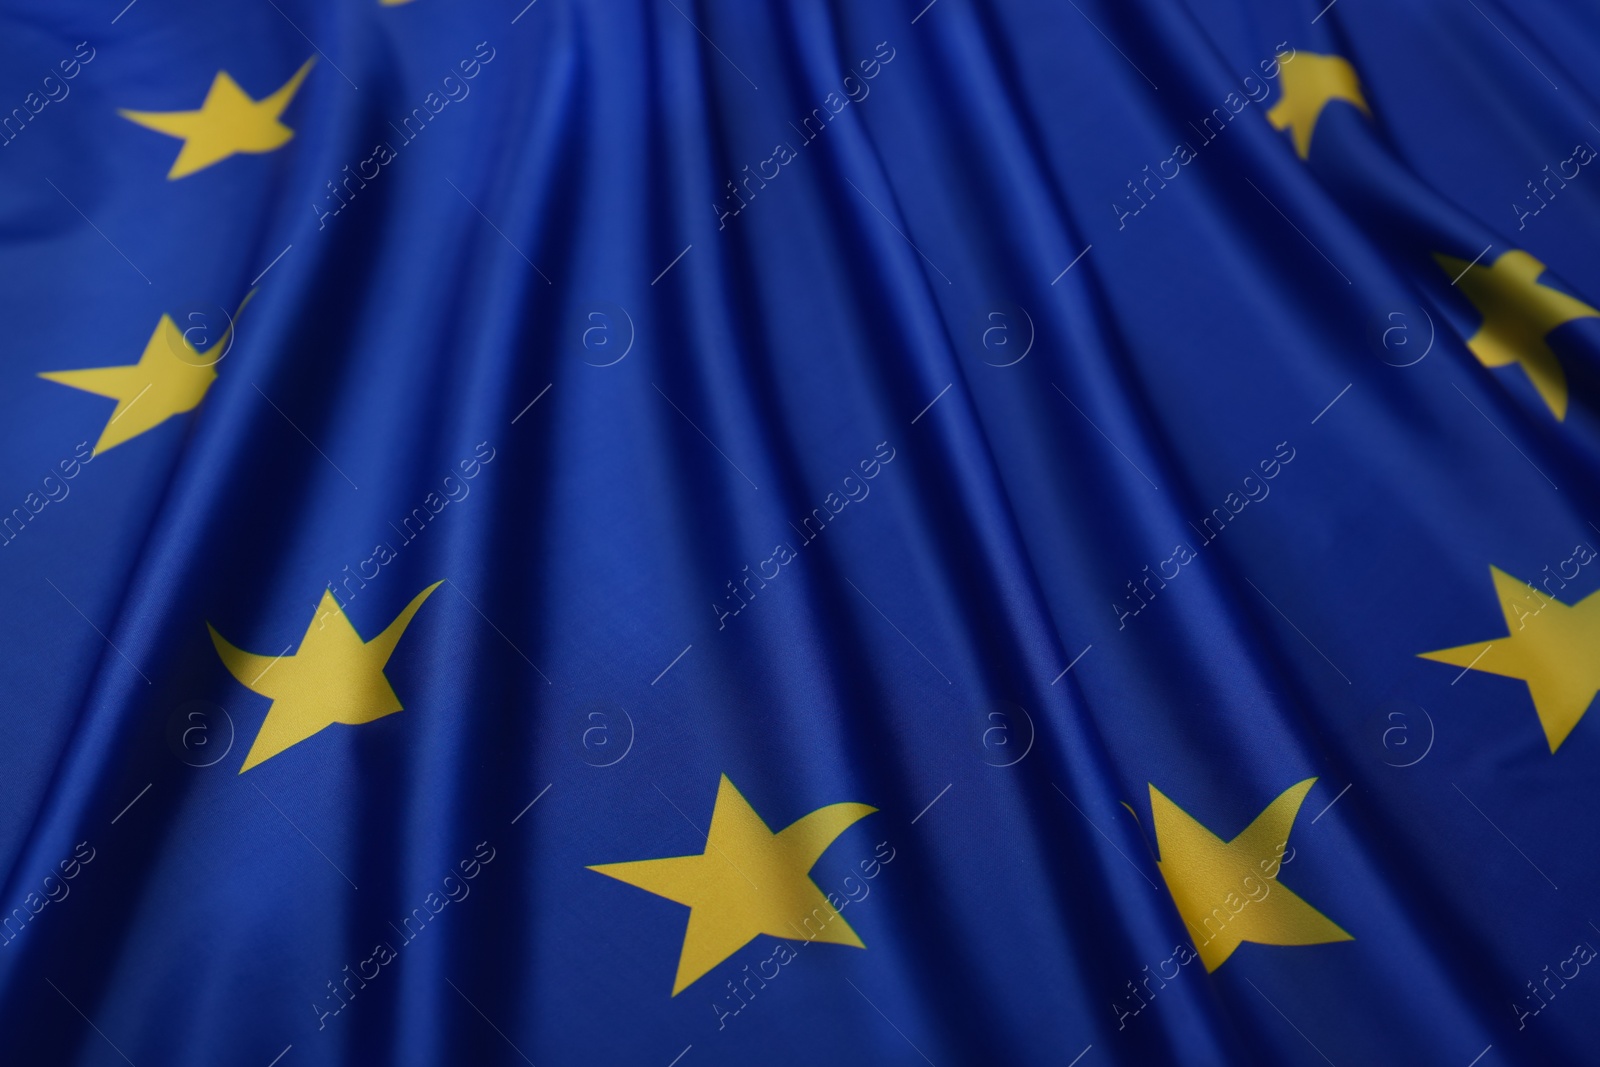 Photo of Flag of European Union as background, closeup view